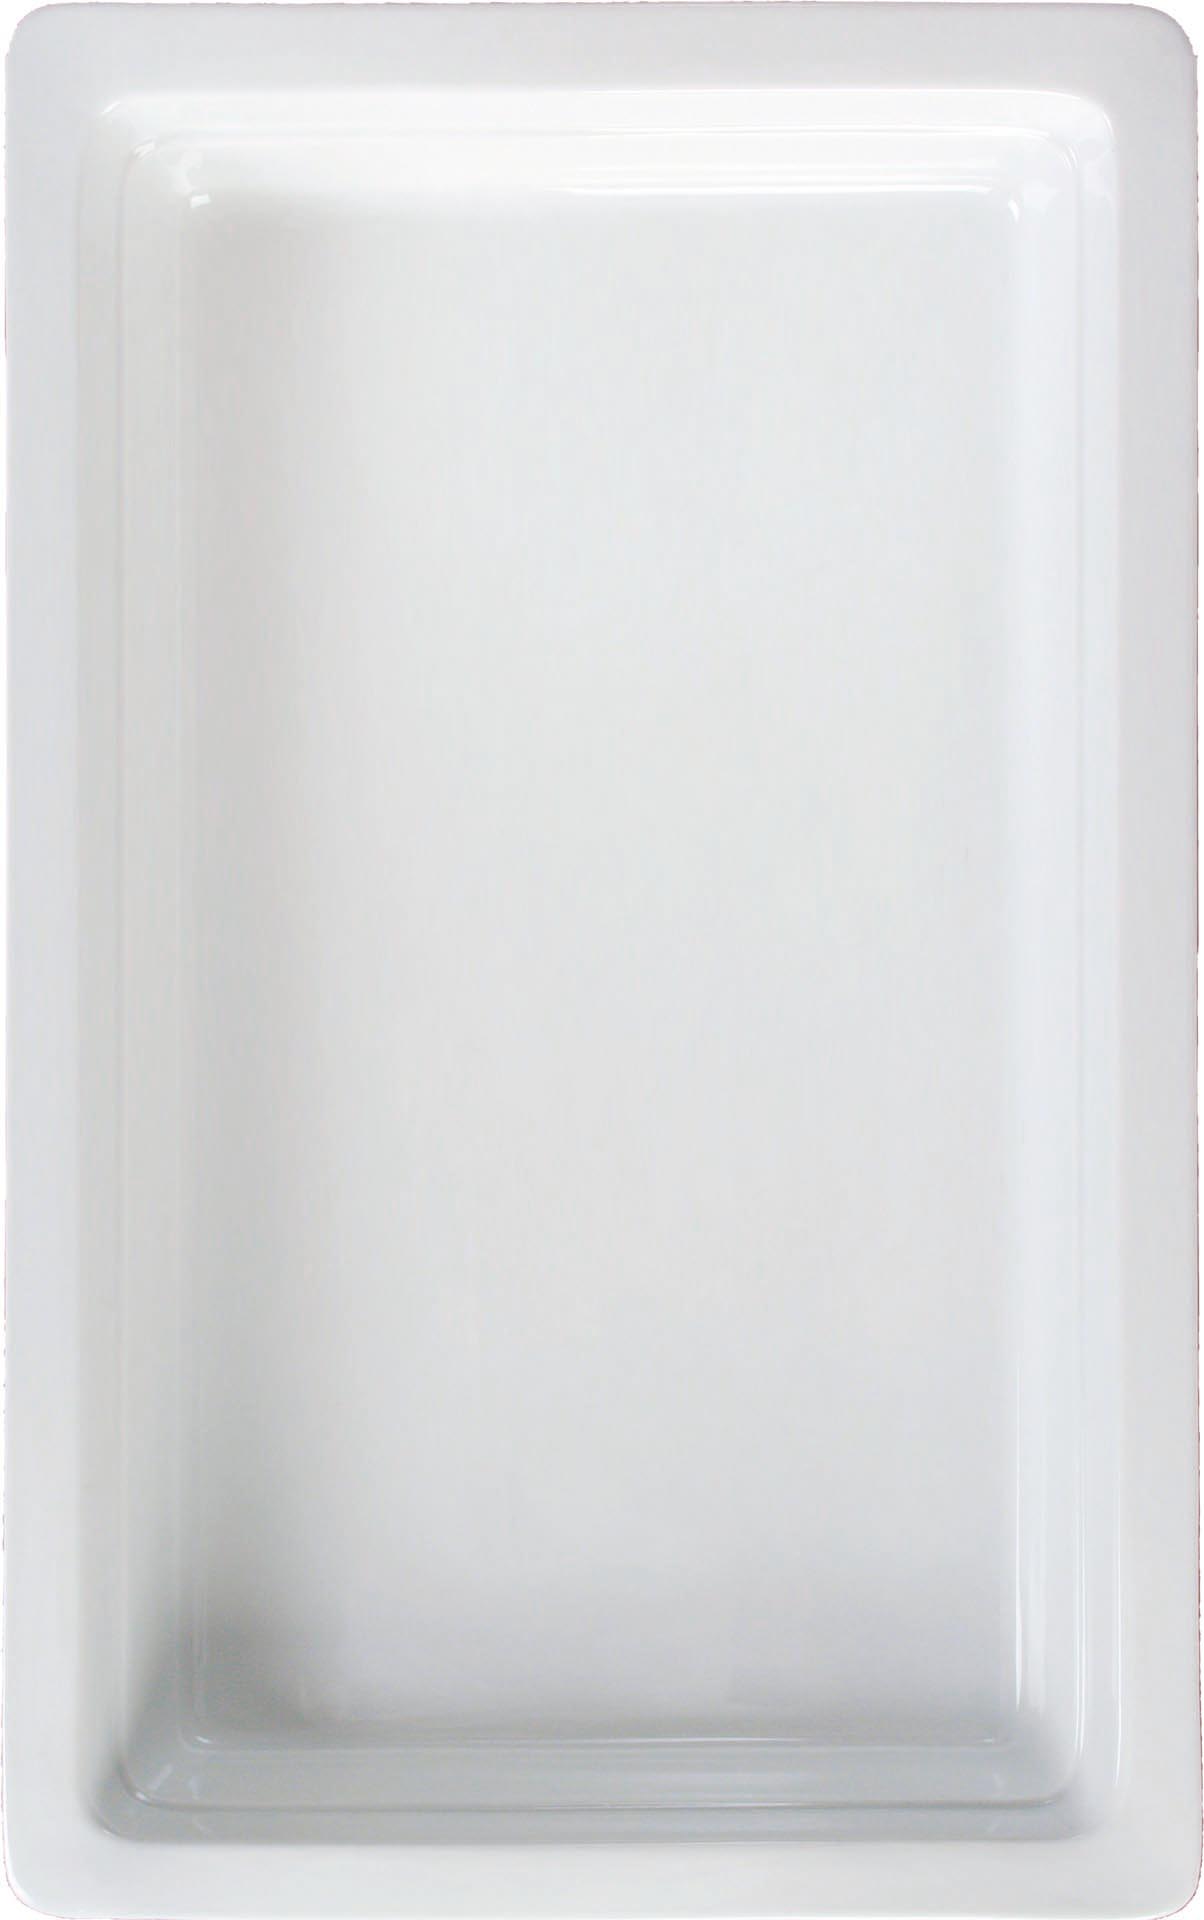 GN-Behälter Porzellan 1/3 65mm tief